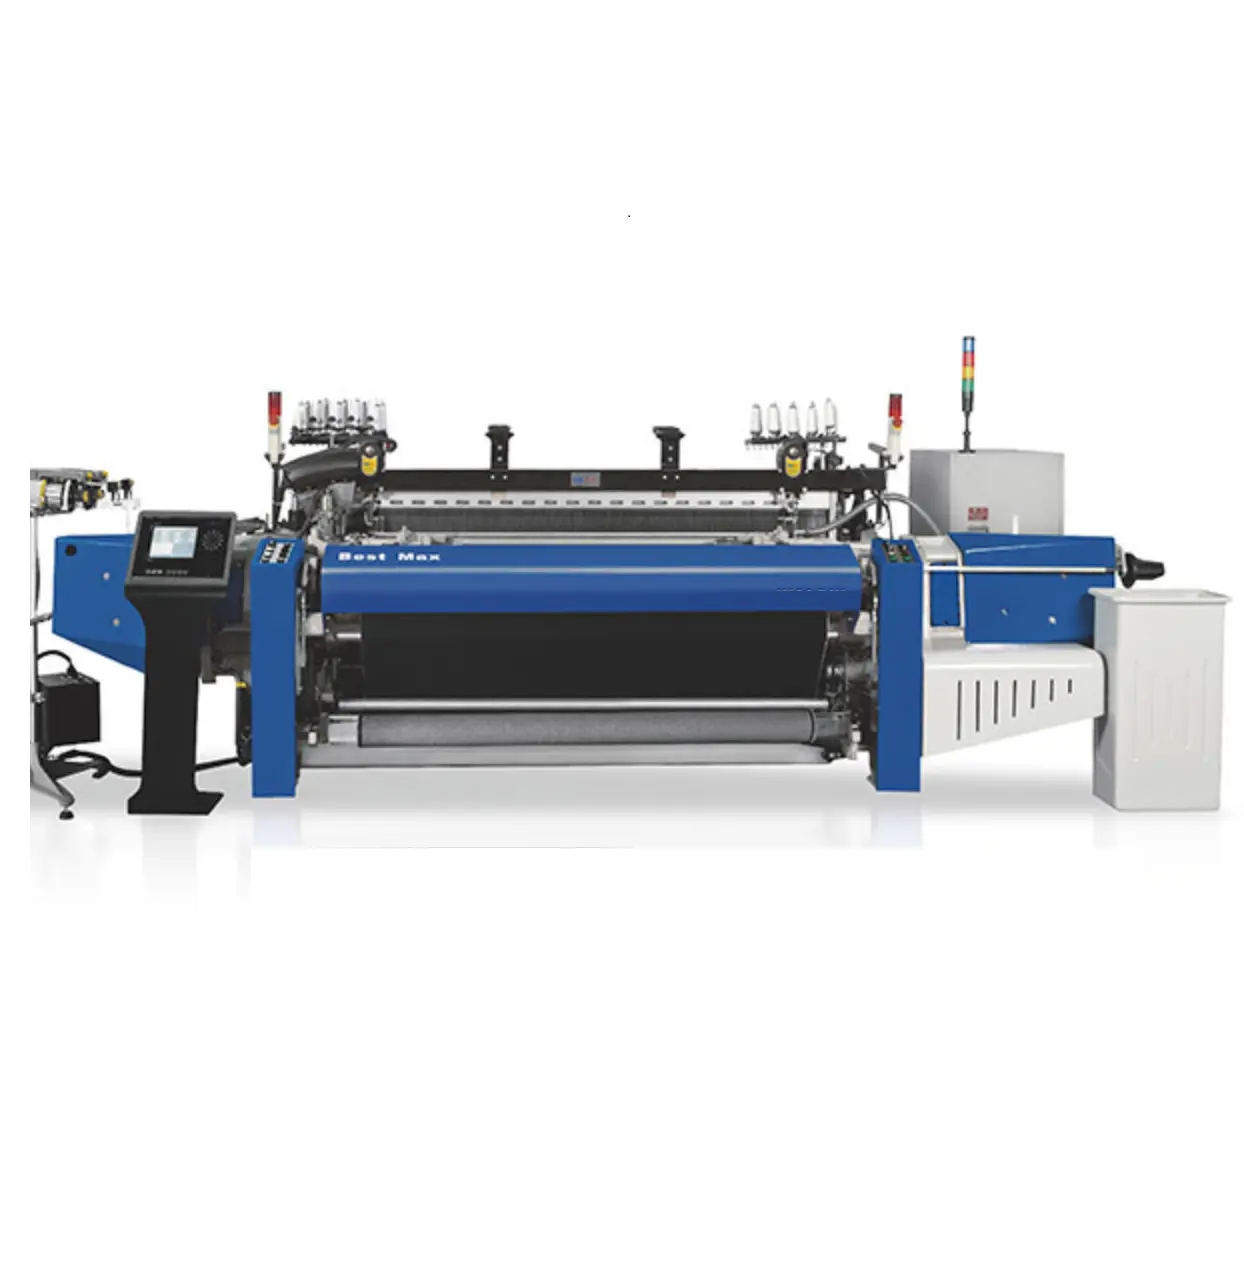 High quality textile knitting equipment textile carpet weaving power loom machinery terry towel rapier loom